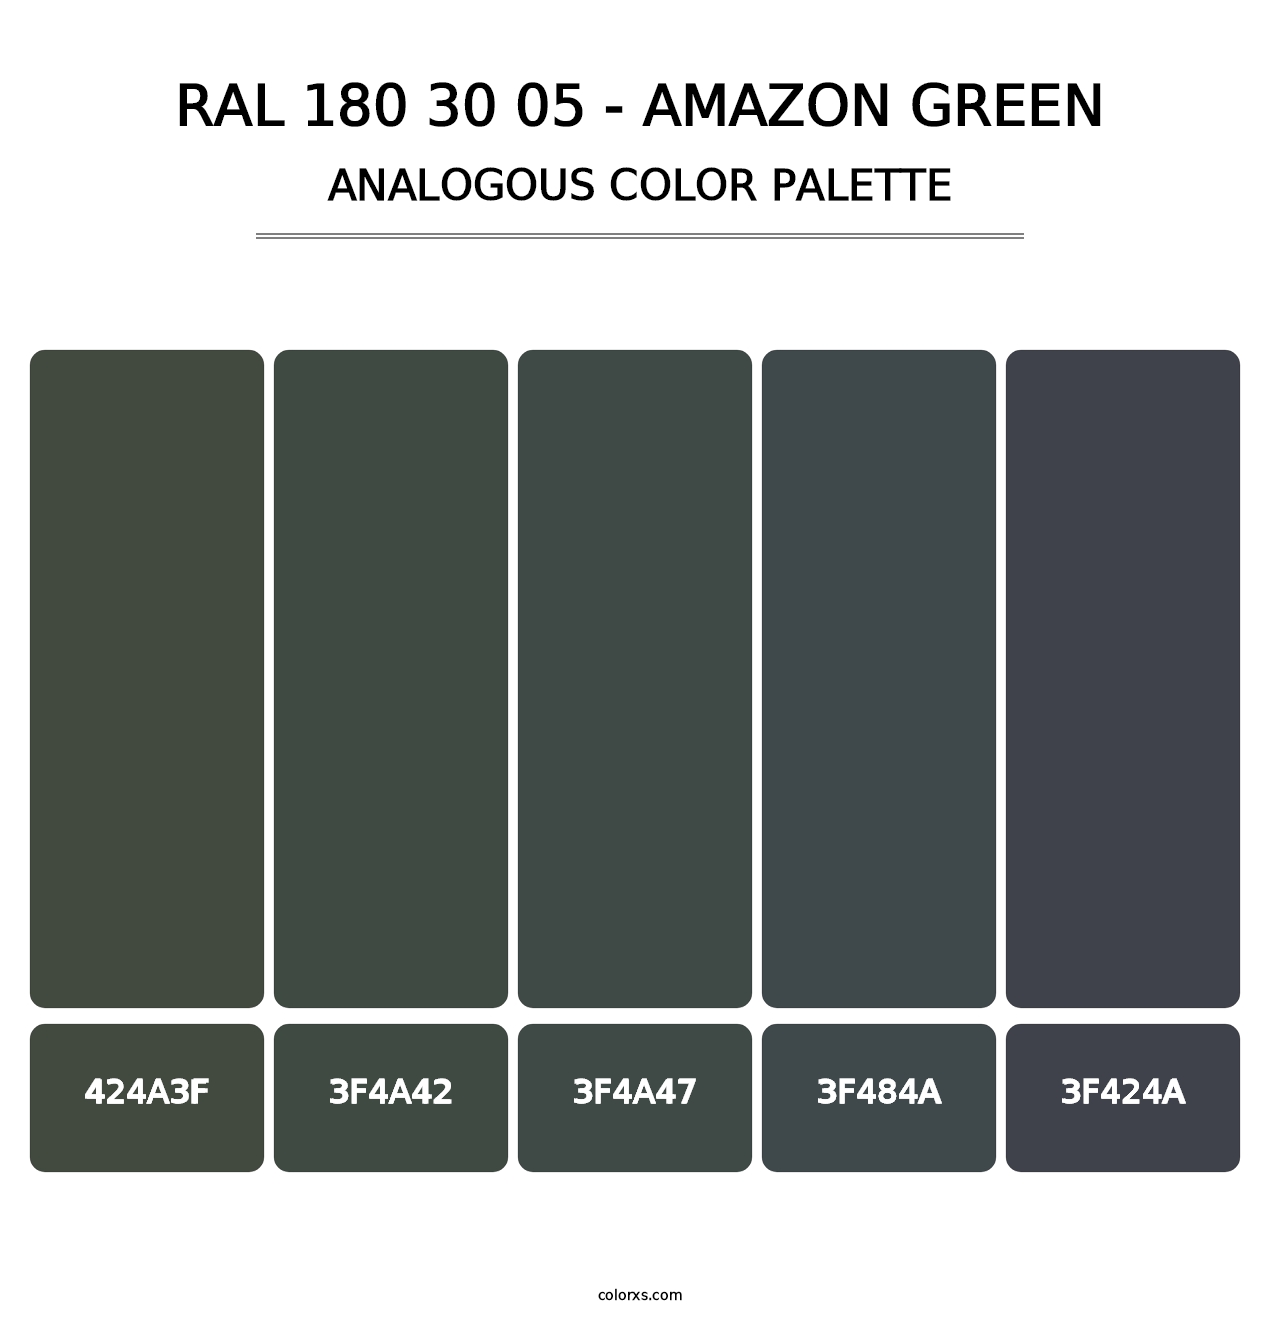 RAL 180 30 05 - Amazon Green - Analogous Color Palette